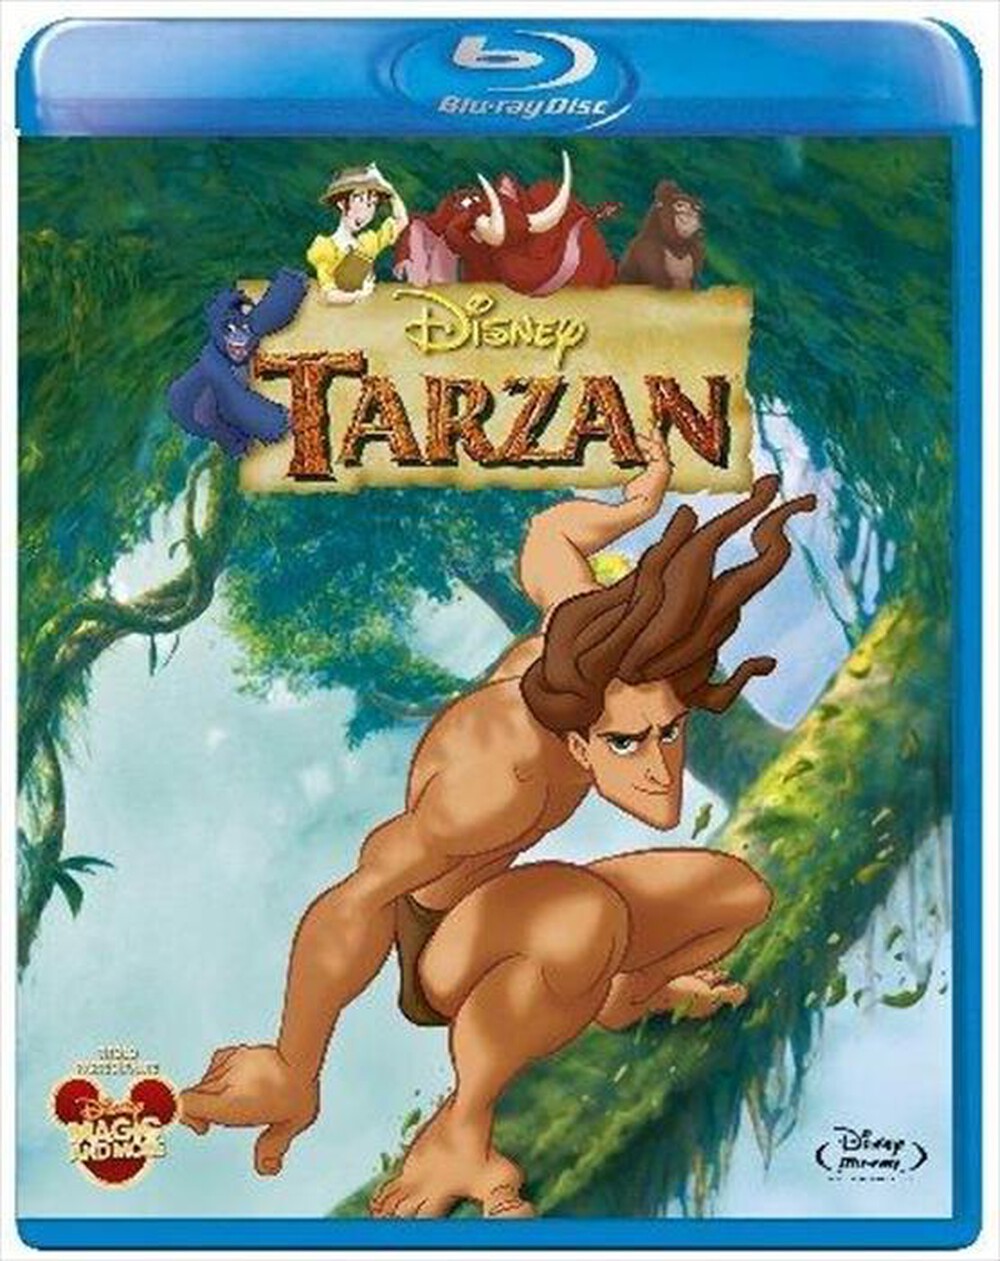 "EAGLE PICTURES - Tarzan"